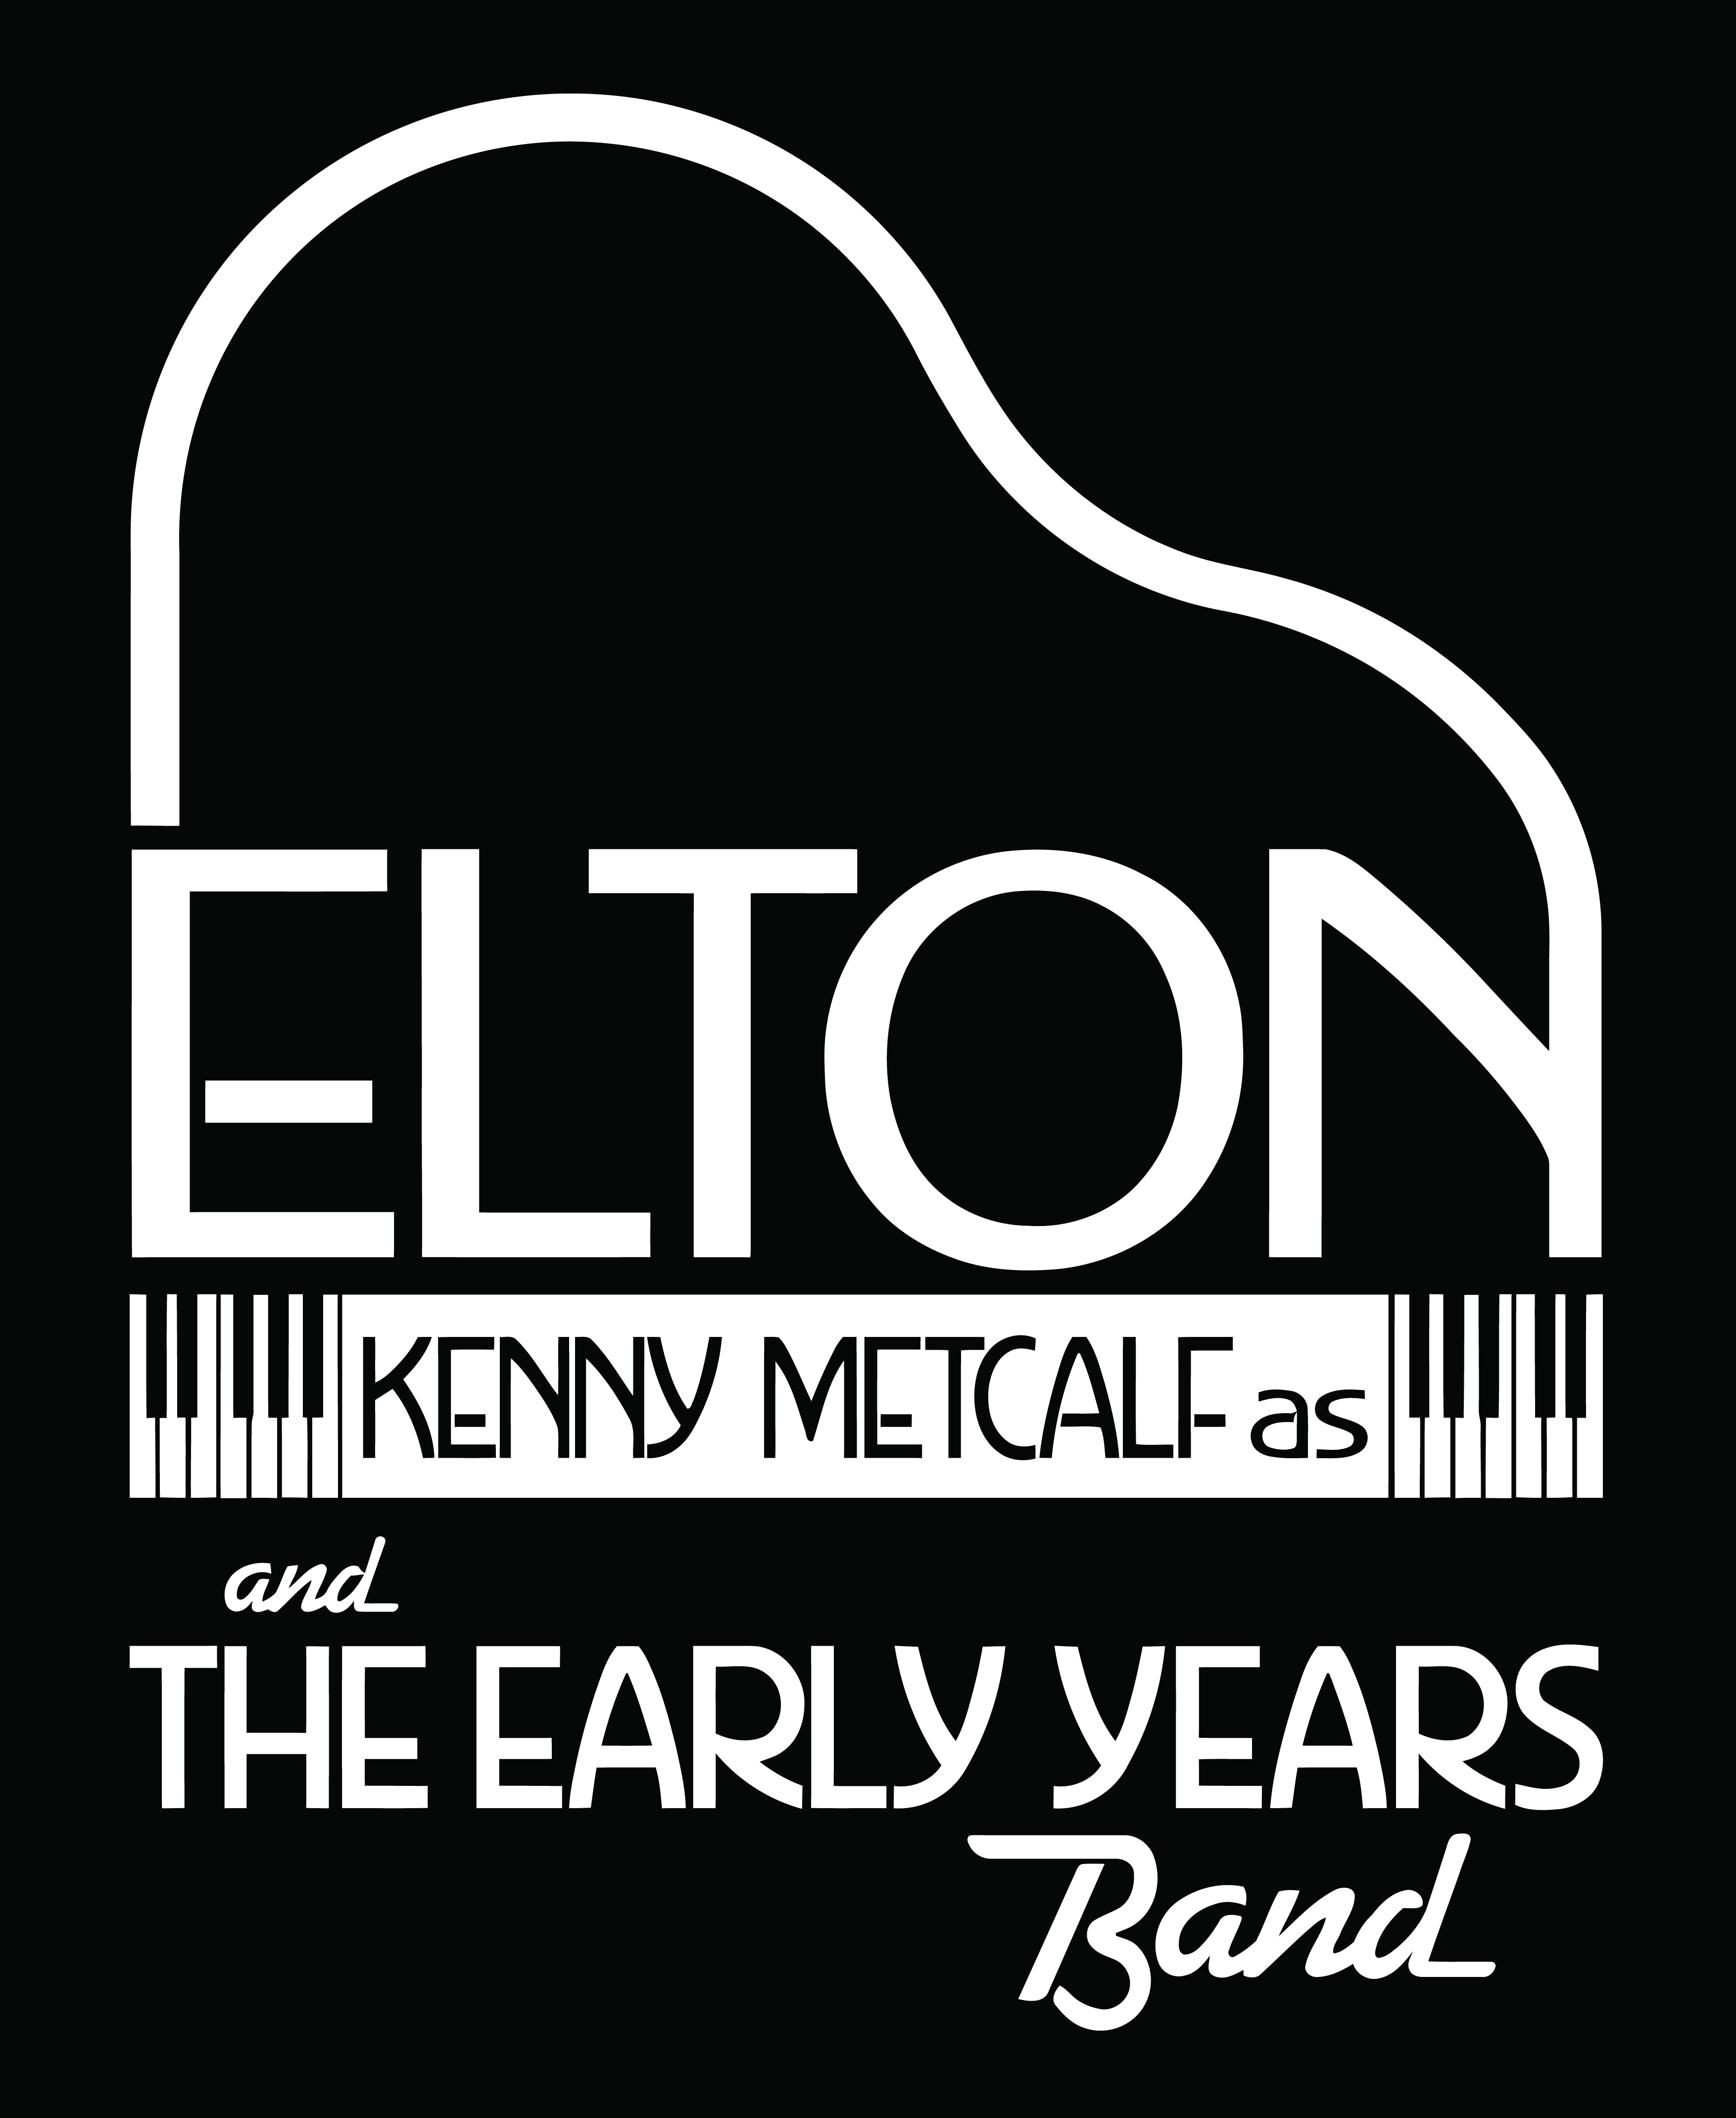 Kenny Metcalf as Elton John